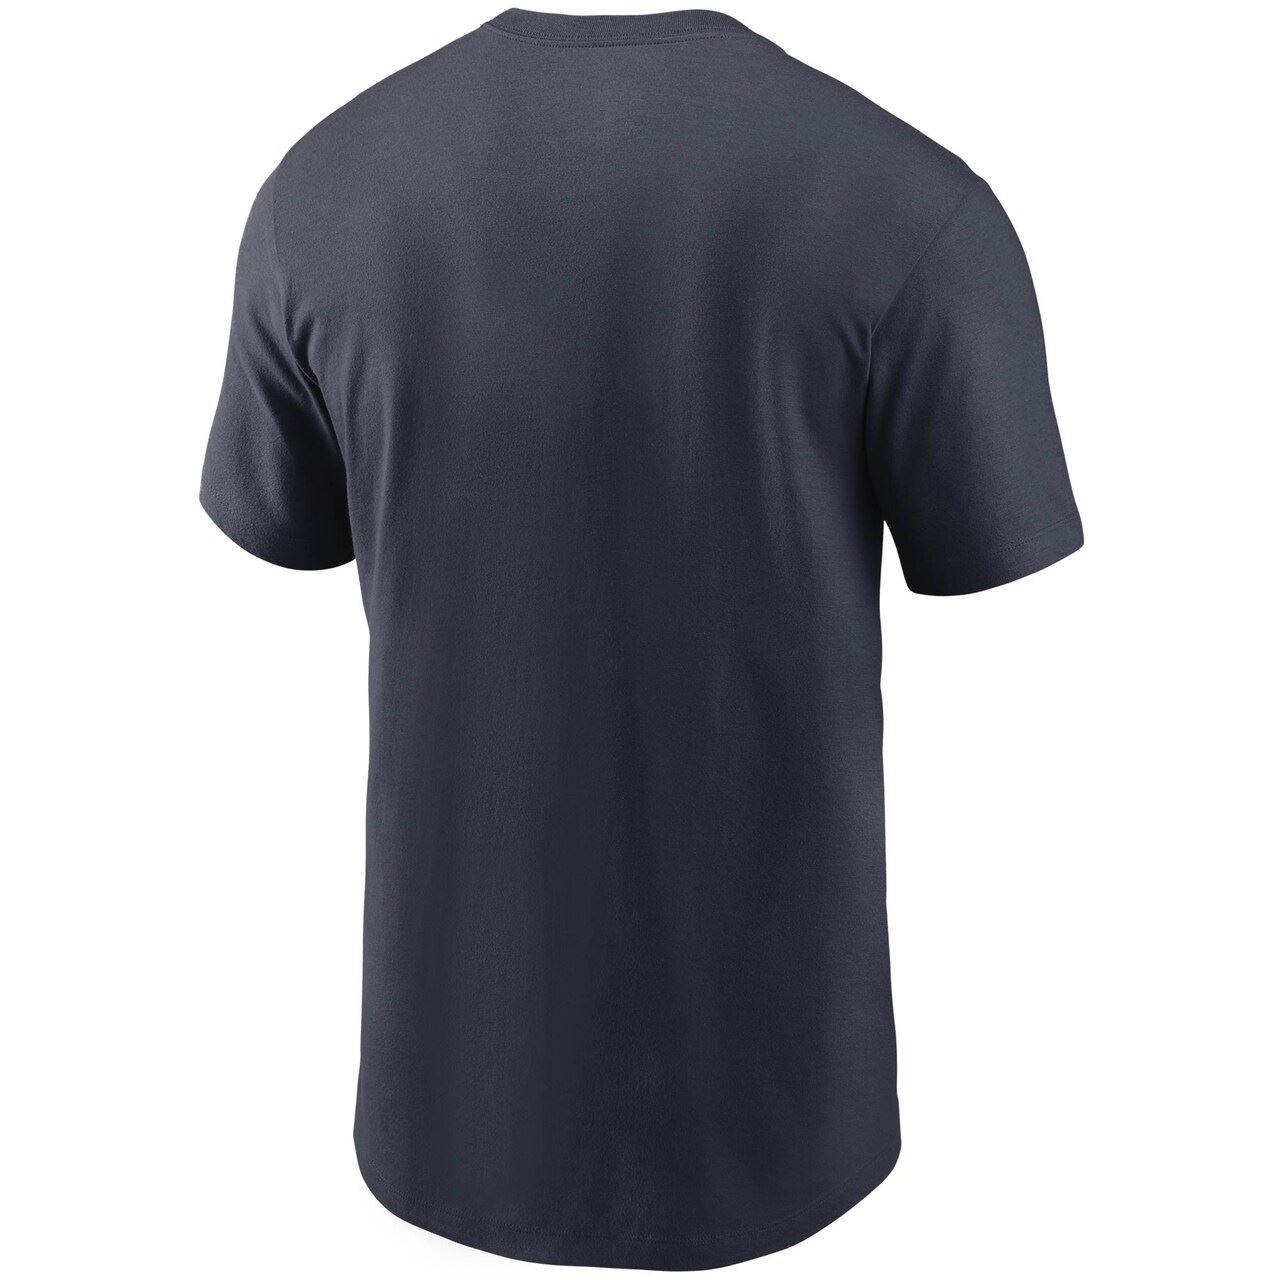 Houston Texans NFL Split Team Name Essential Tee Marine T-Shirt Nike